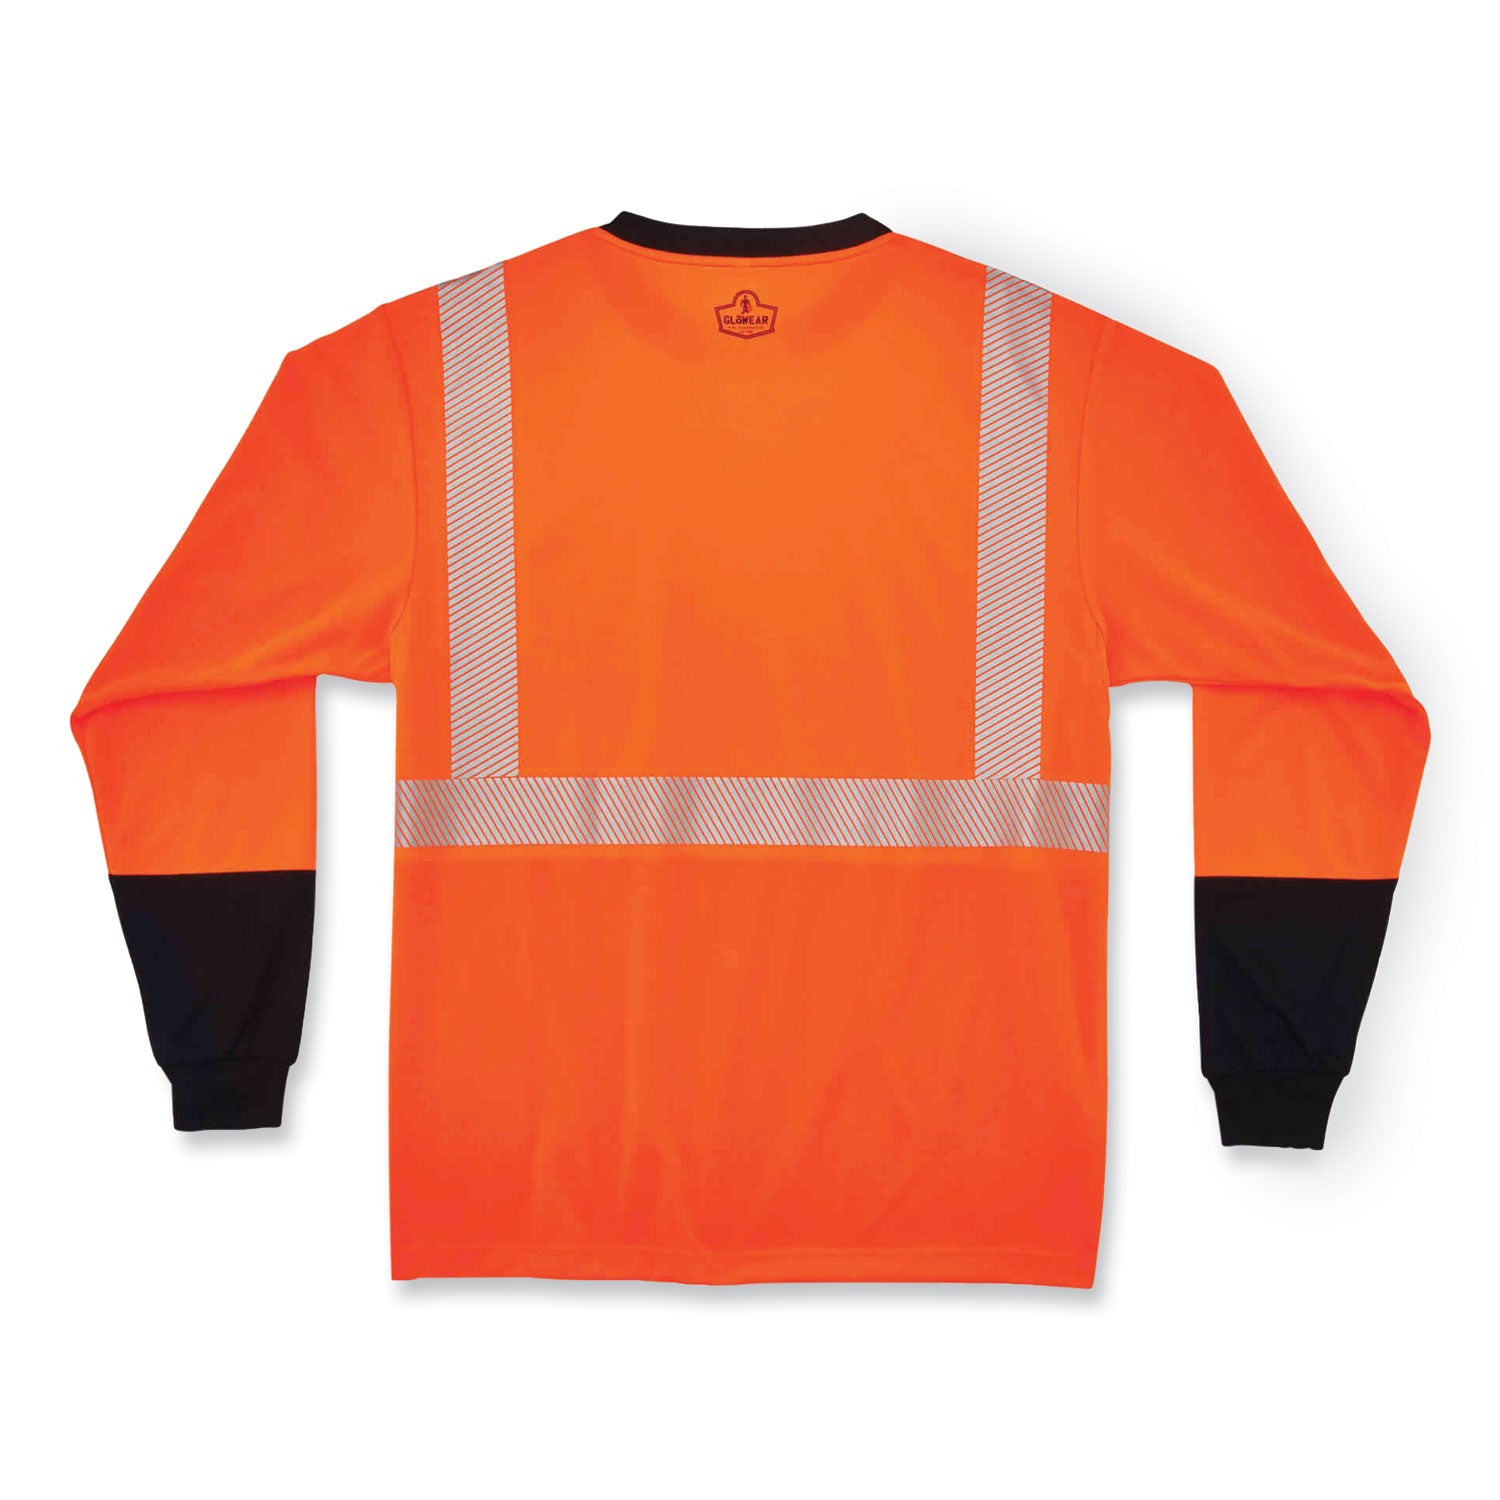 glowear-8281bk-class-2-long-sleeve-shirt-with-black-bottom-polyester-x-large-orange-ships-in-1-3-business-days_ego22685 - 3